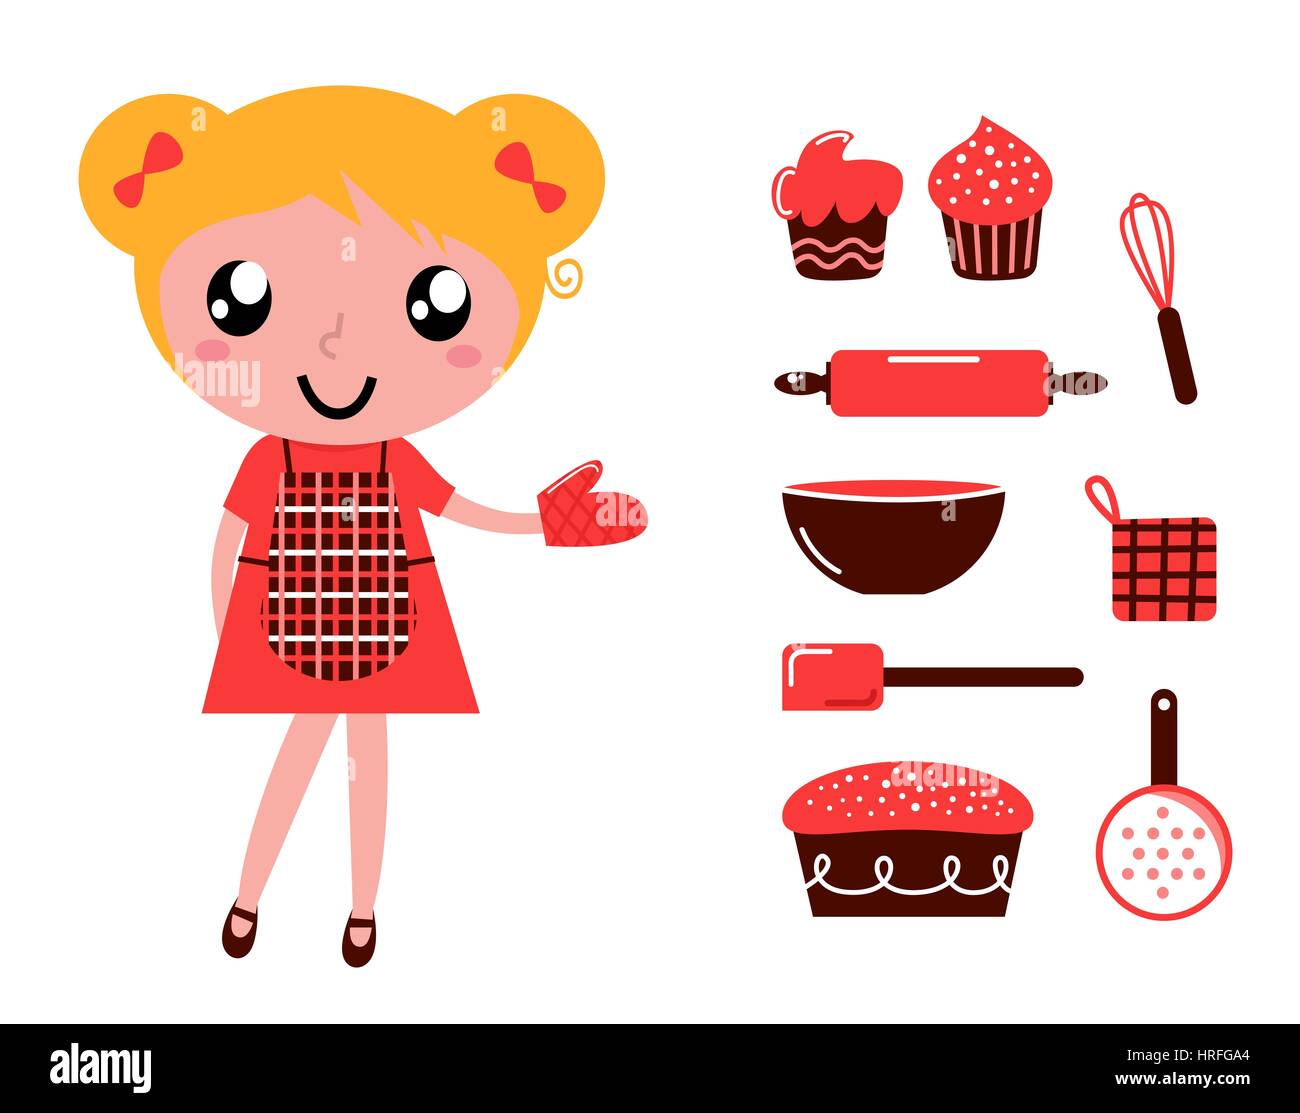 12481406 - retro baking girl - vector cartoon illustration Stock Photo